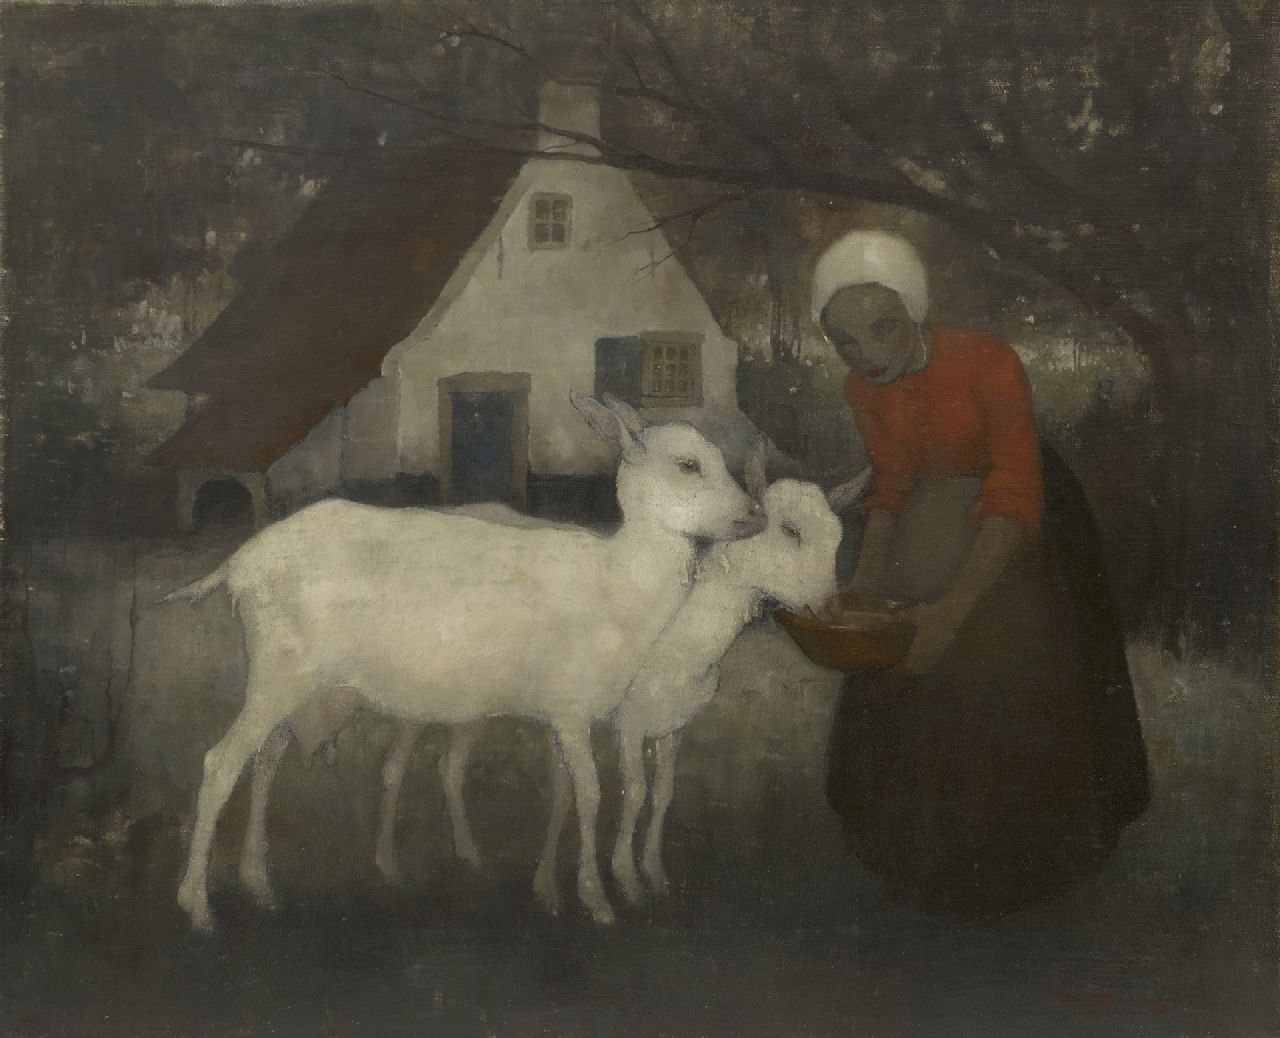 Hoboken J. van | Jacoba 'Jemmy' van Hoboken, Feeding the goats, oil on canvas 36.1 x 43.8 cm, signed l.r. and dated '34